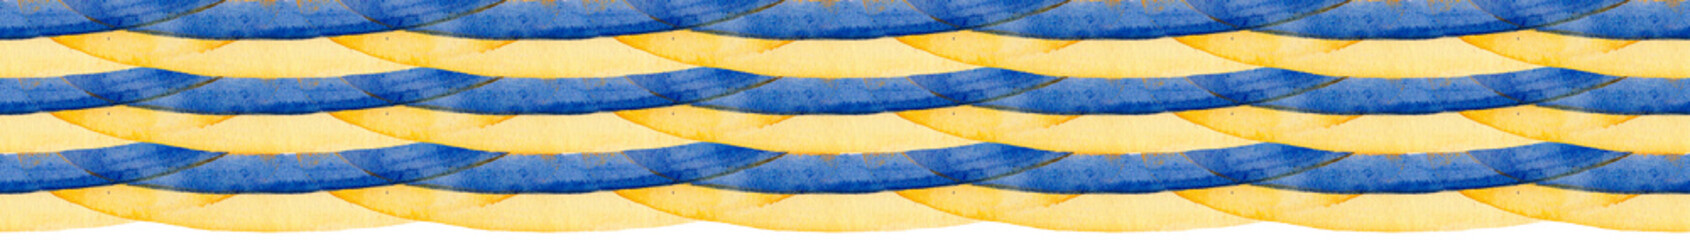 Ukraine blue and yellow bicolor flag illustration suitable for banner or background. Ukrainian national flag image